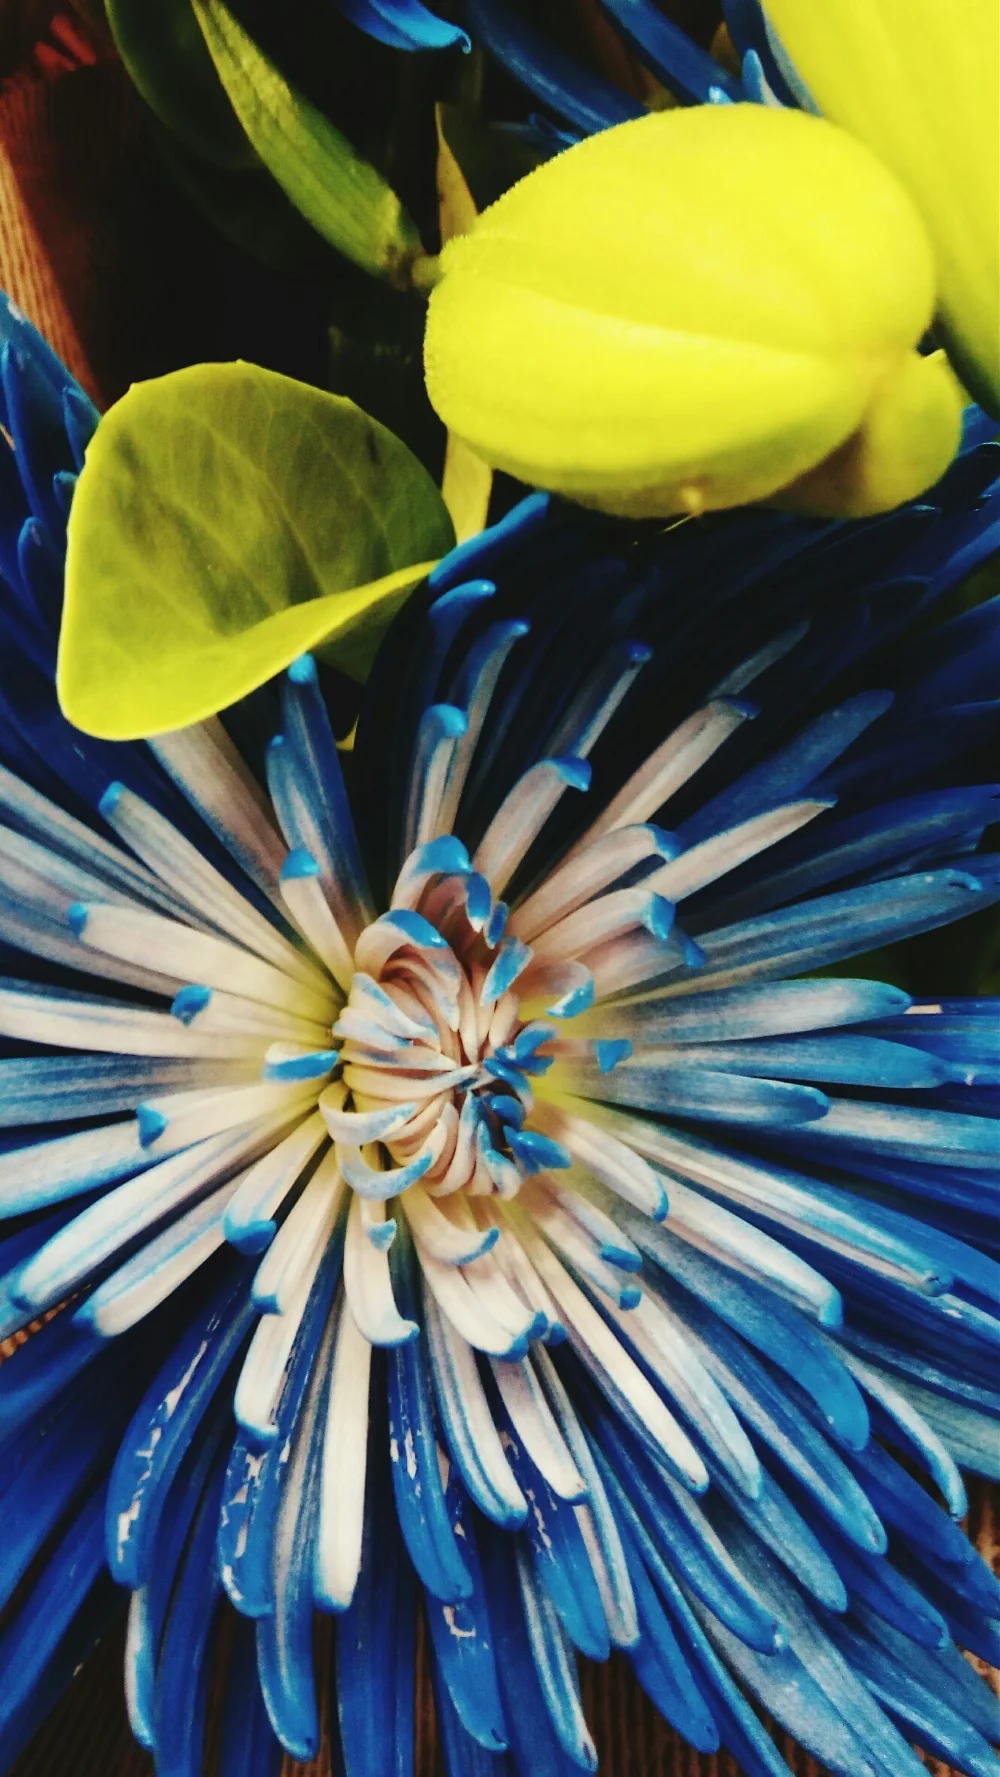 Blue
#Blueflowers#naturallightphotography #uneditedphotography #closeupphotography#Nature#floraphotography#Flowers#naturephotography #naturelover